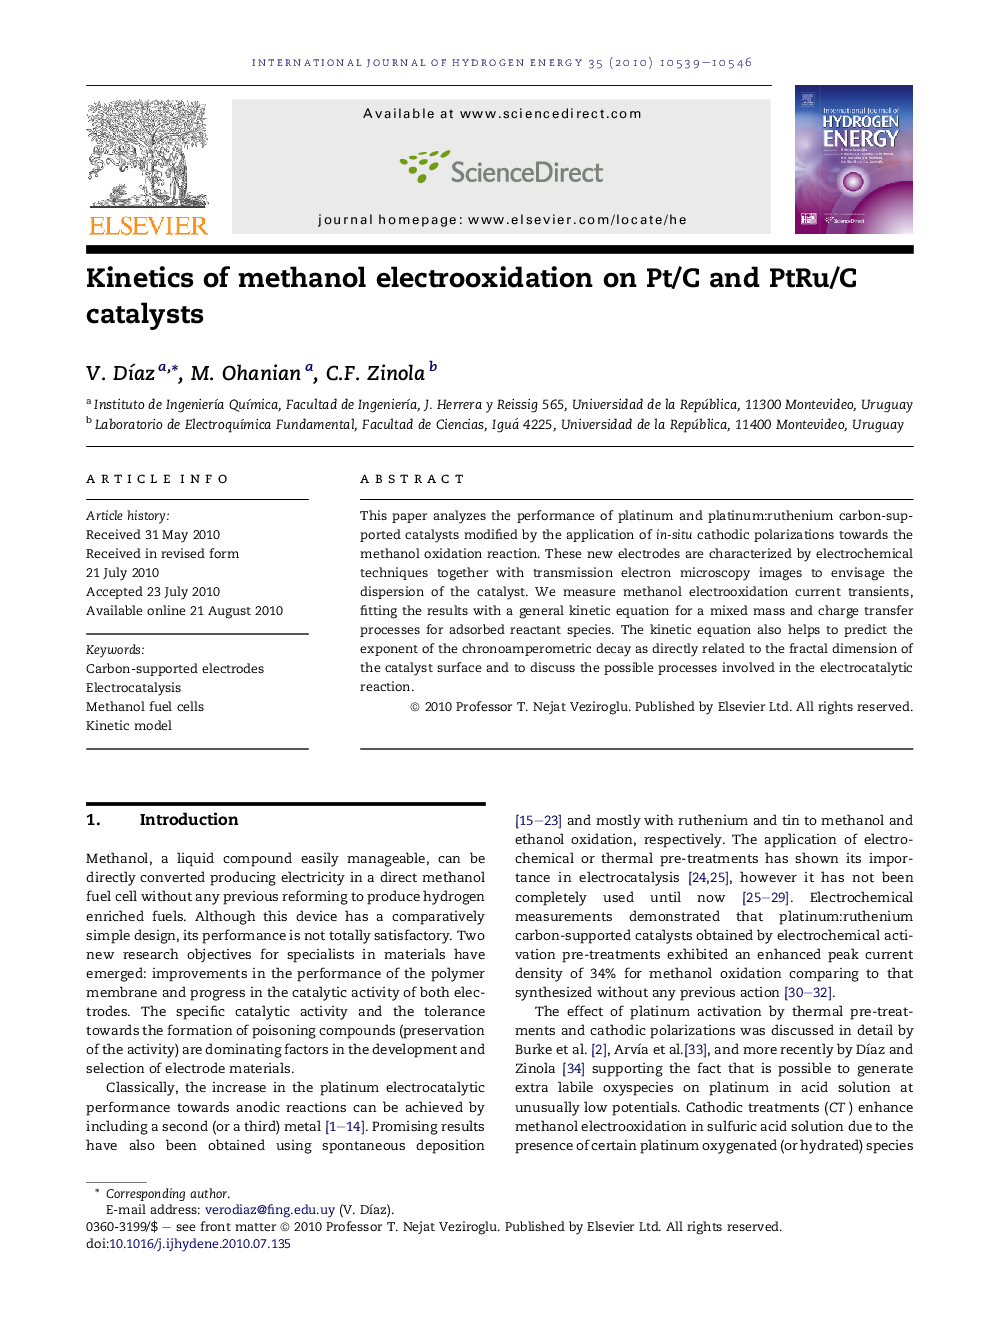 Kinetics of methanol electrooxidation on Pt/C and PtRu/C catalysts